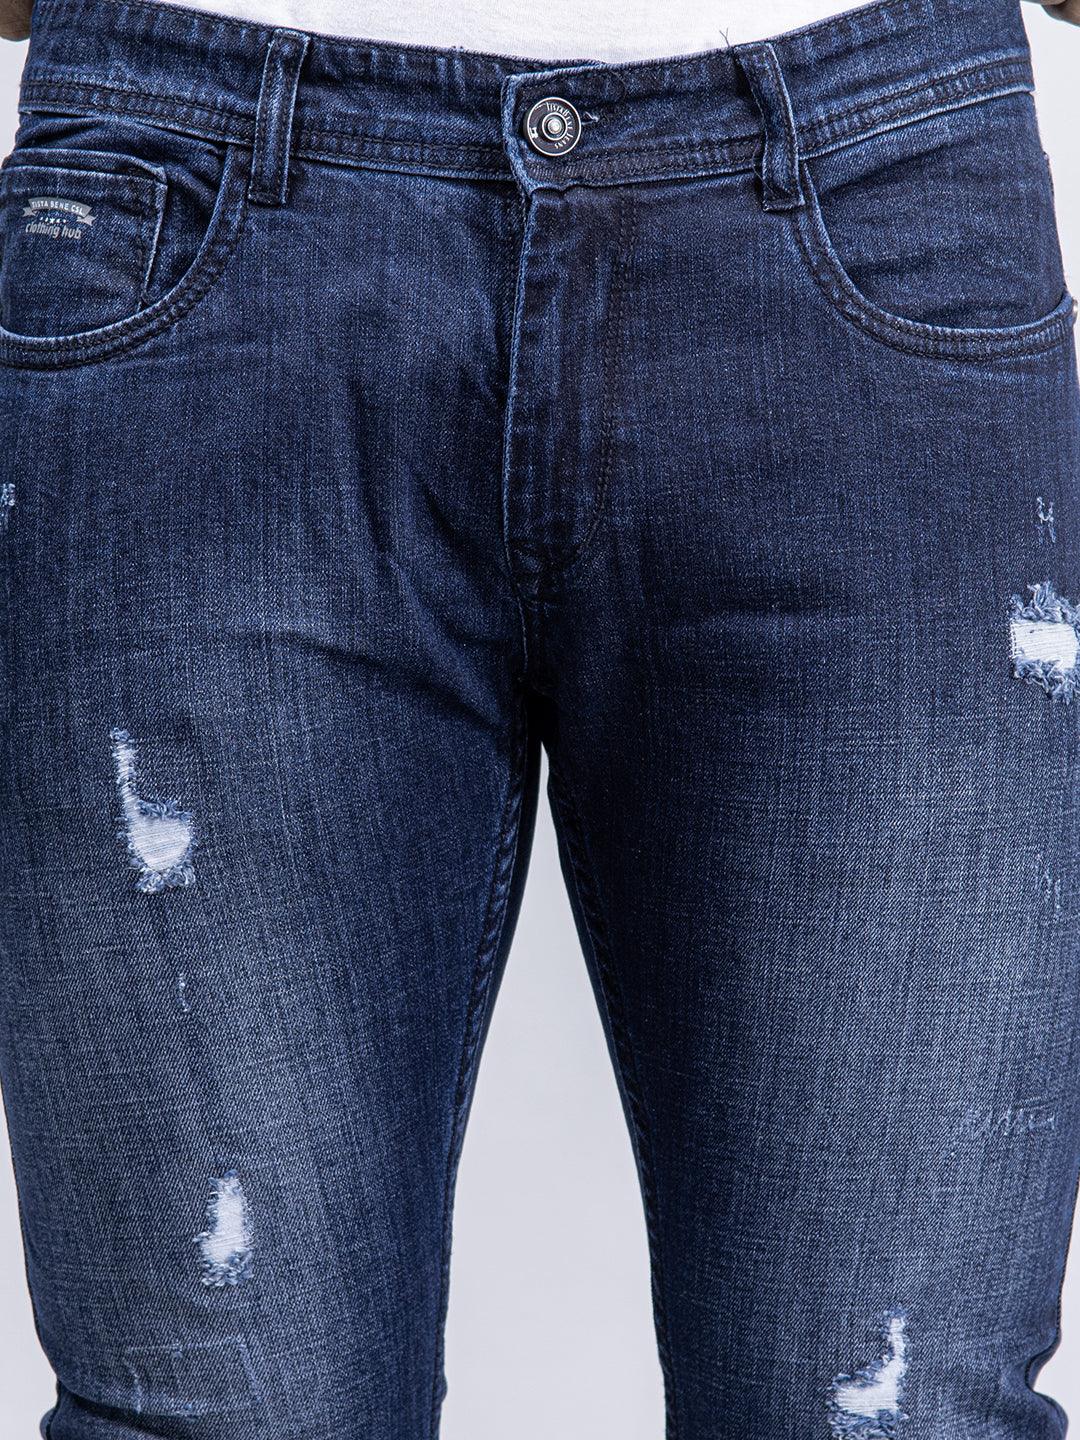 Buy BADMAASH Brume Blue Casual Skinny Fit Jeans for Men at Amazon.in